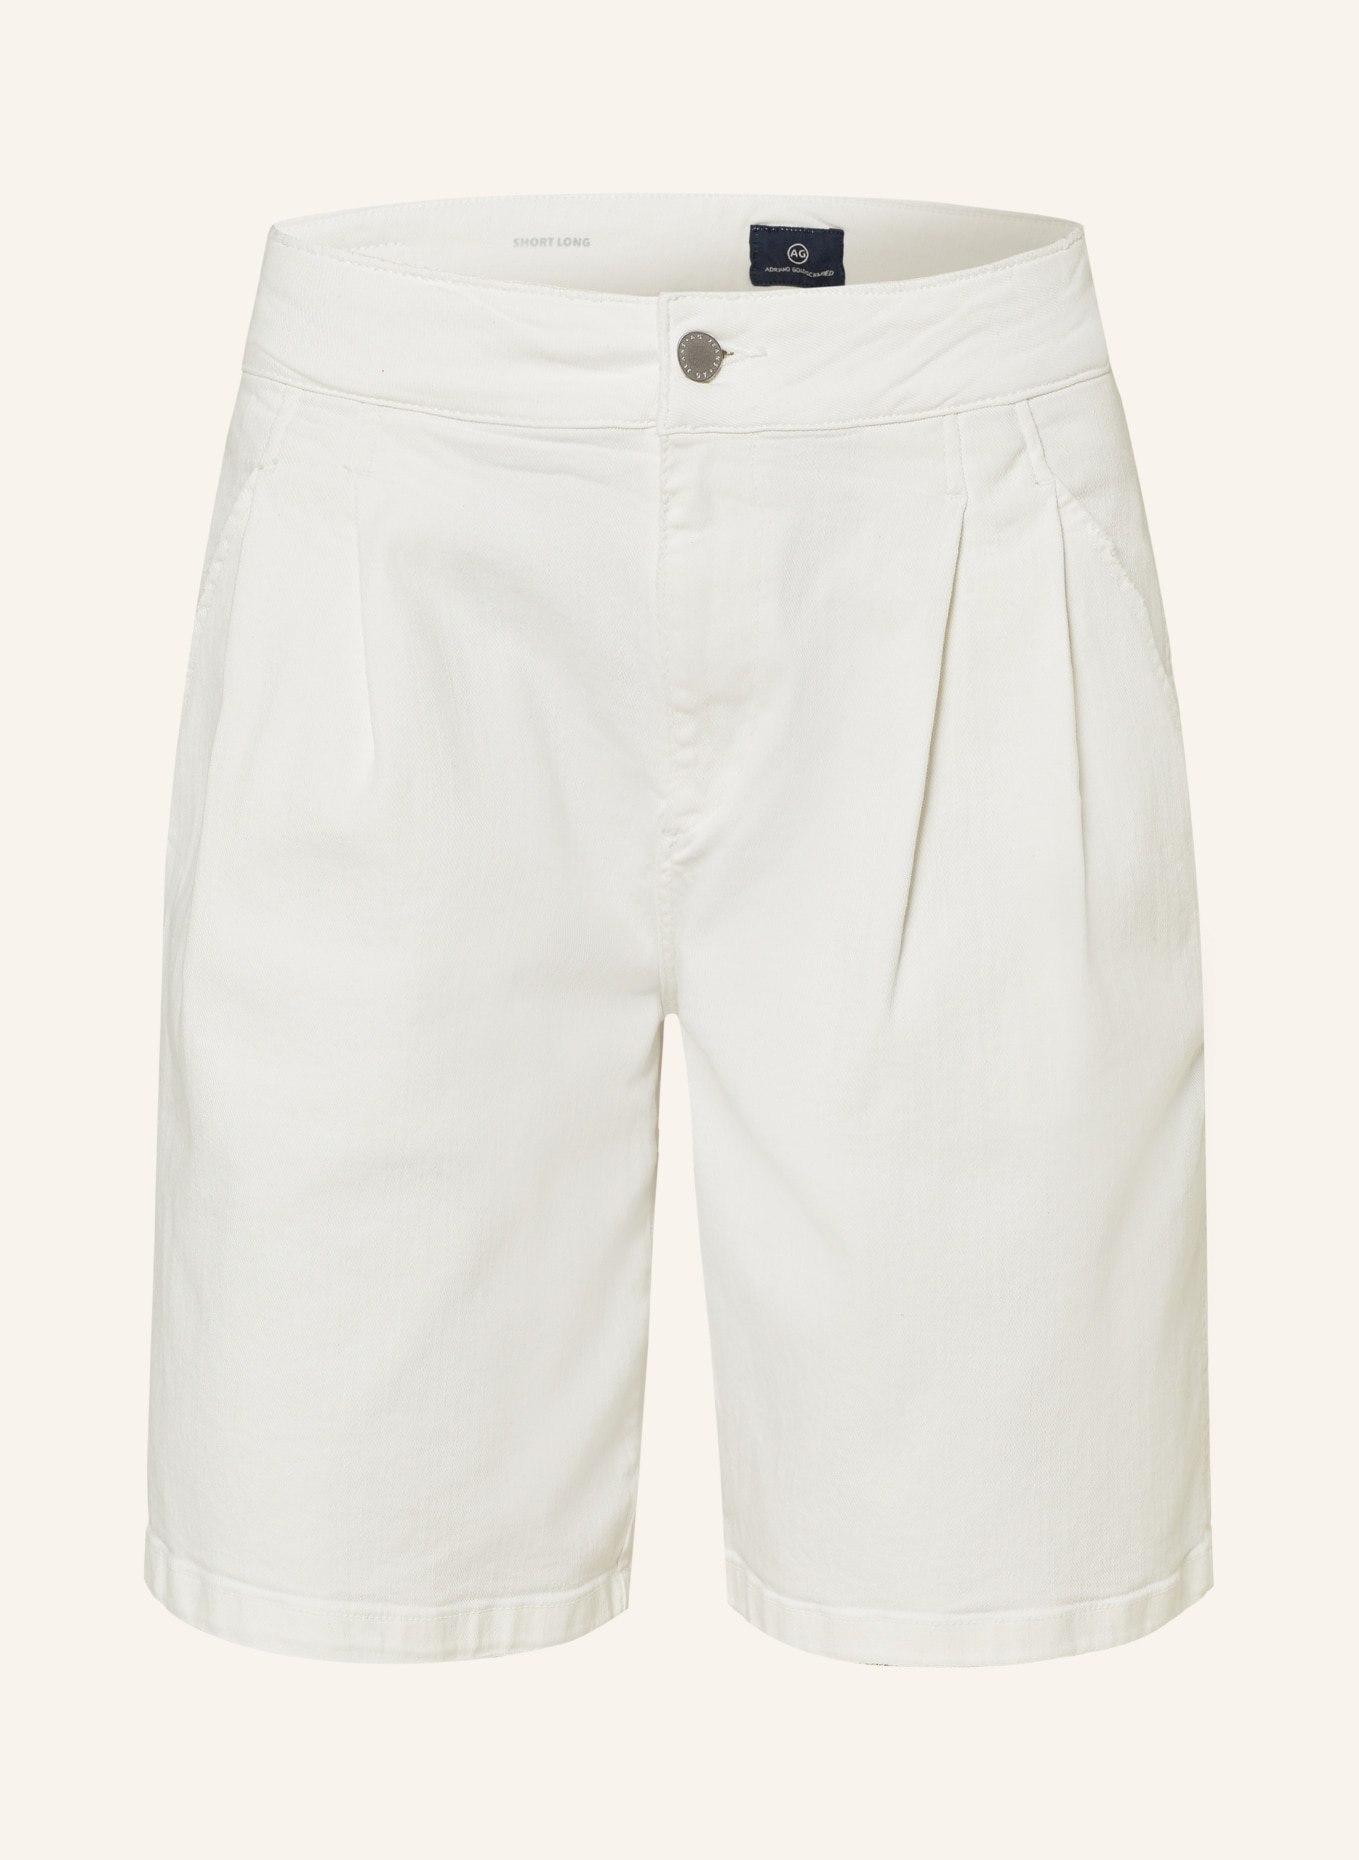 AG Jeans Jeansshorts, Farbe: WHT WHITE (Bild 1)